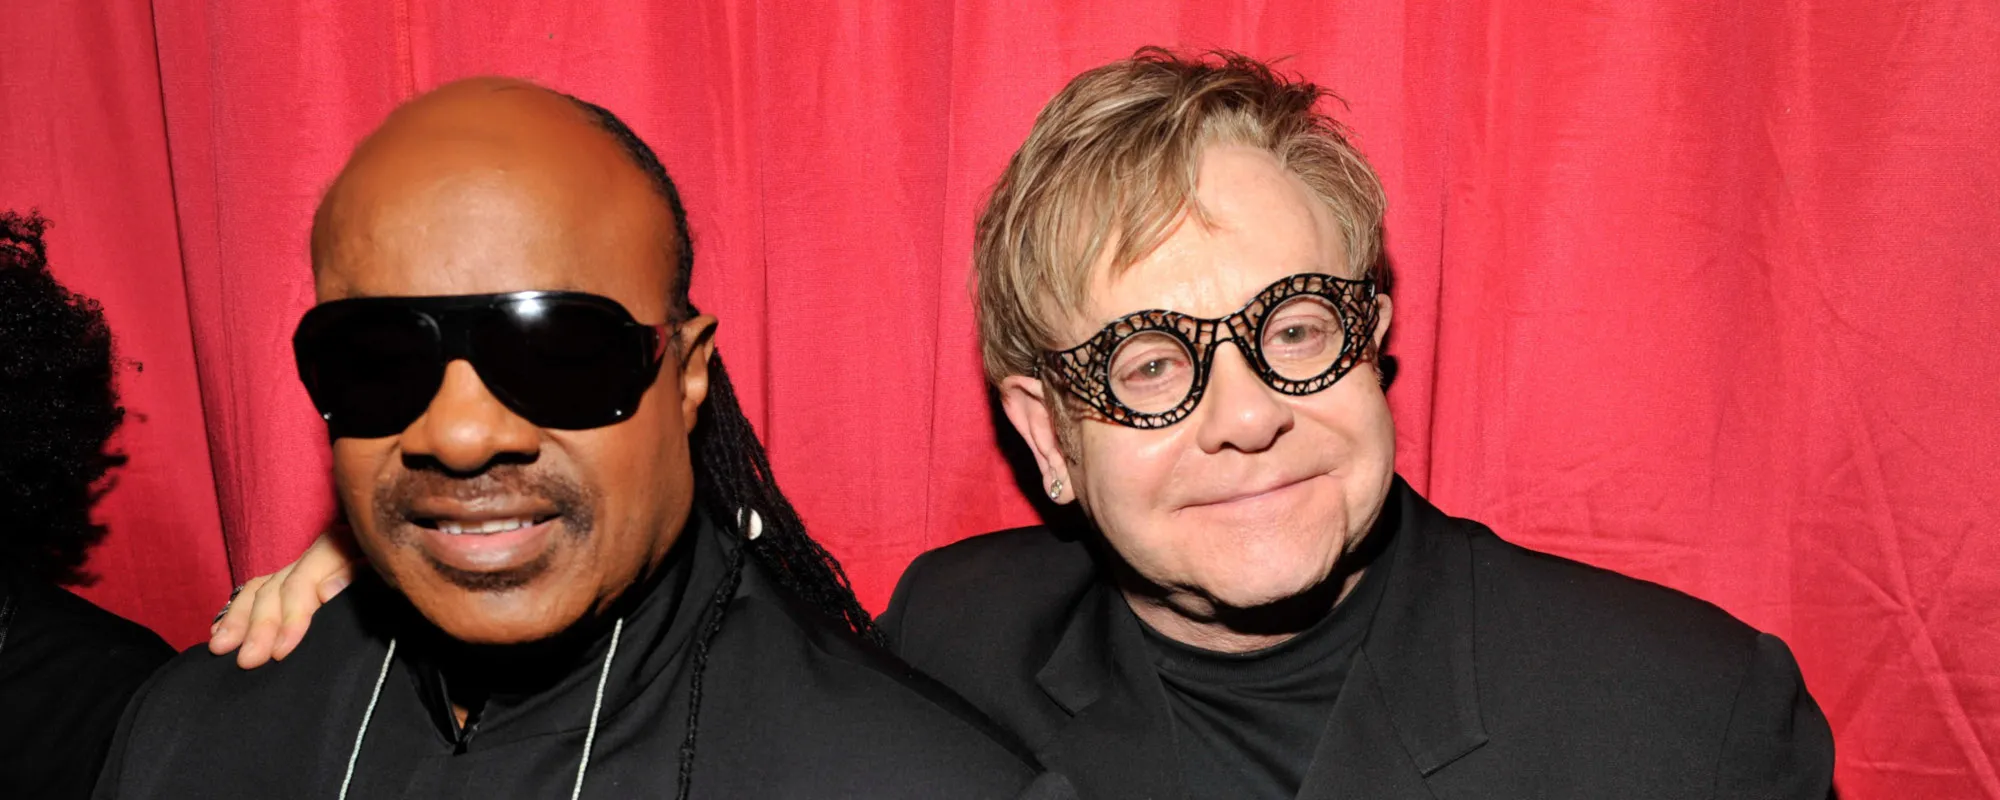 Elton John and Stevie Wonder Release New Collab, “Finish Line”